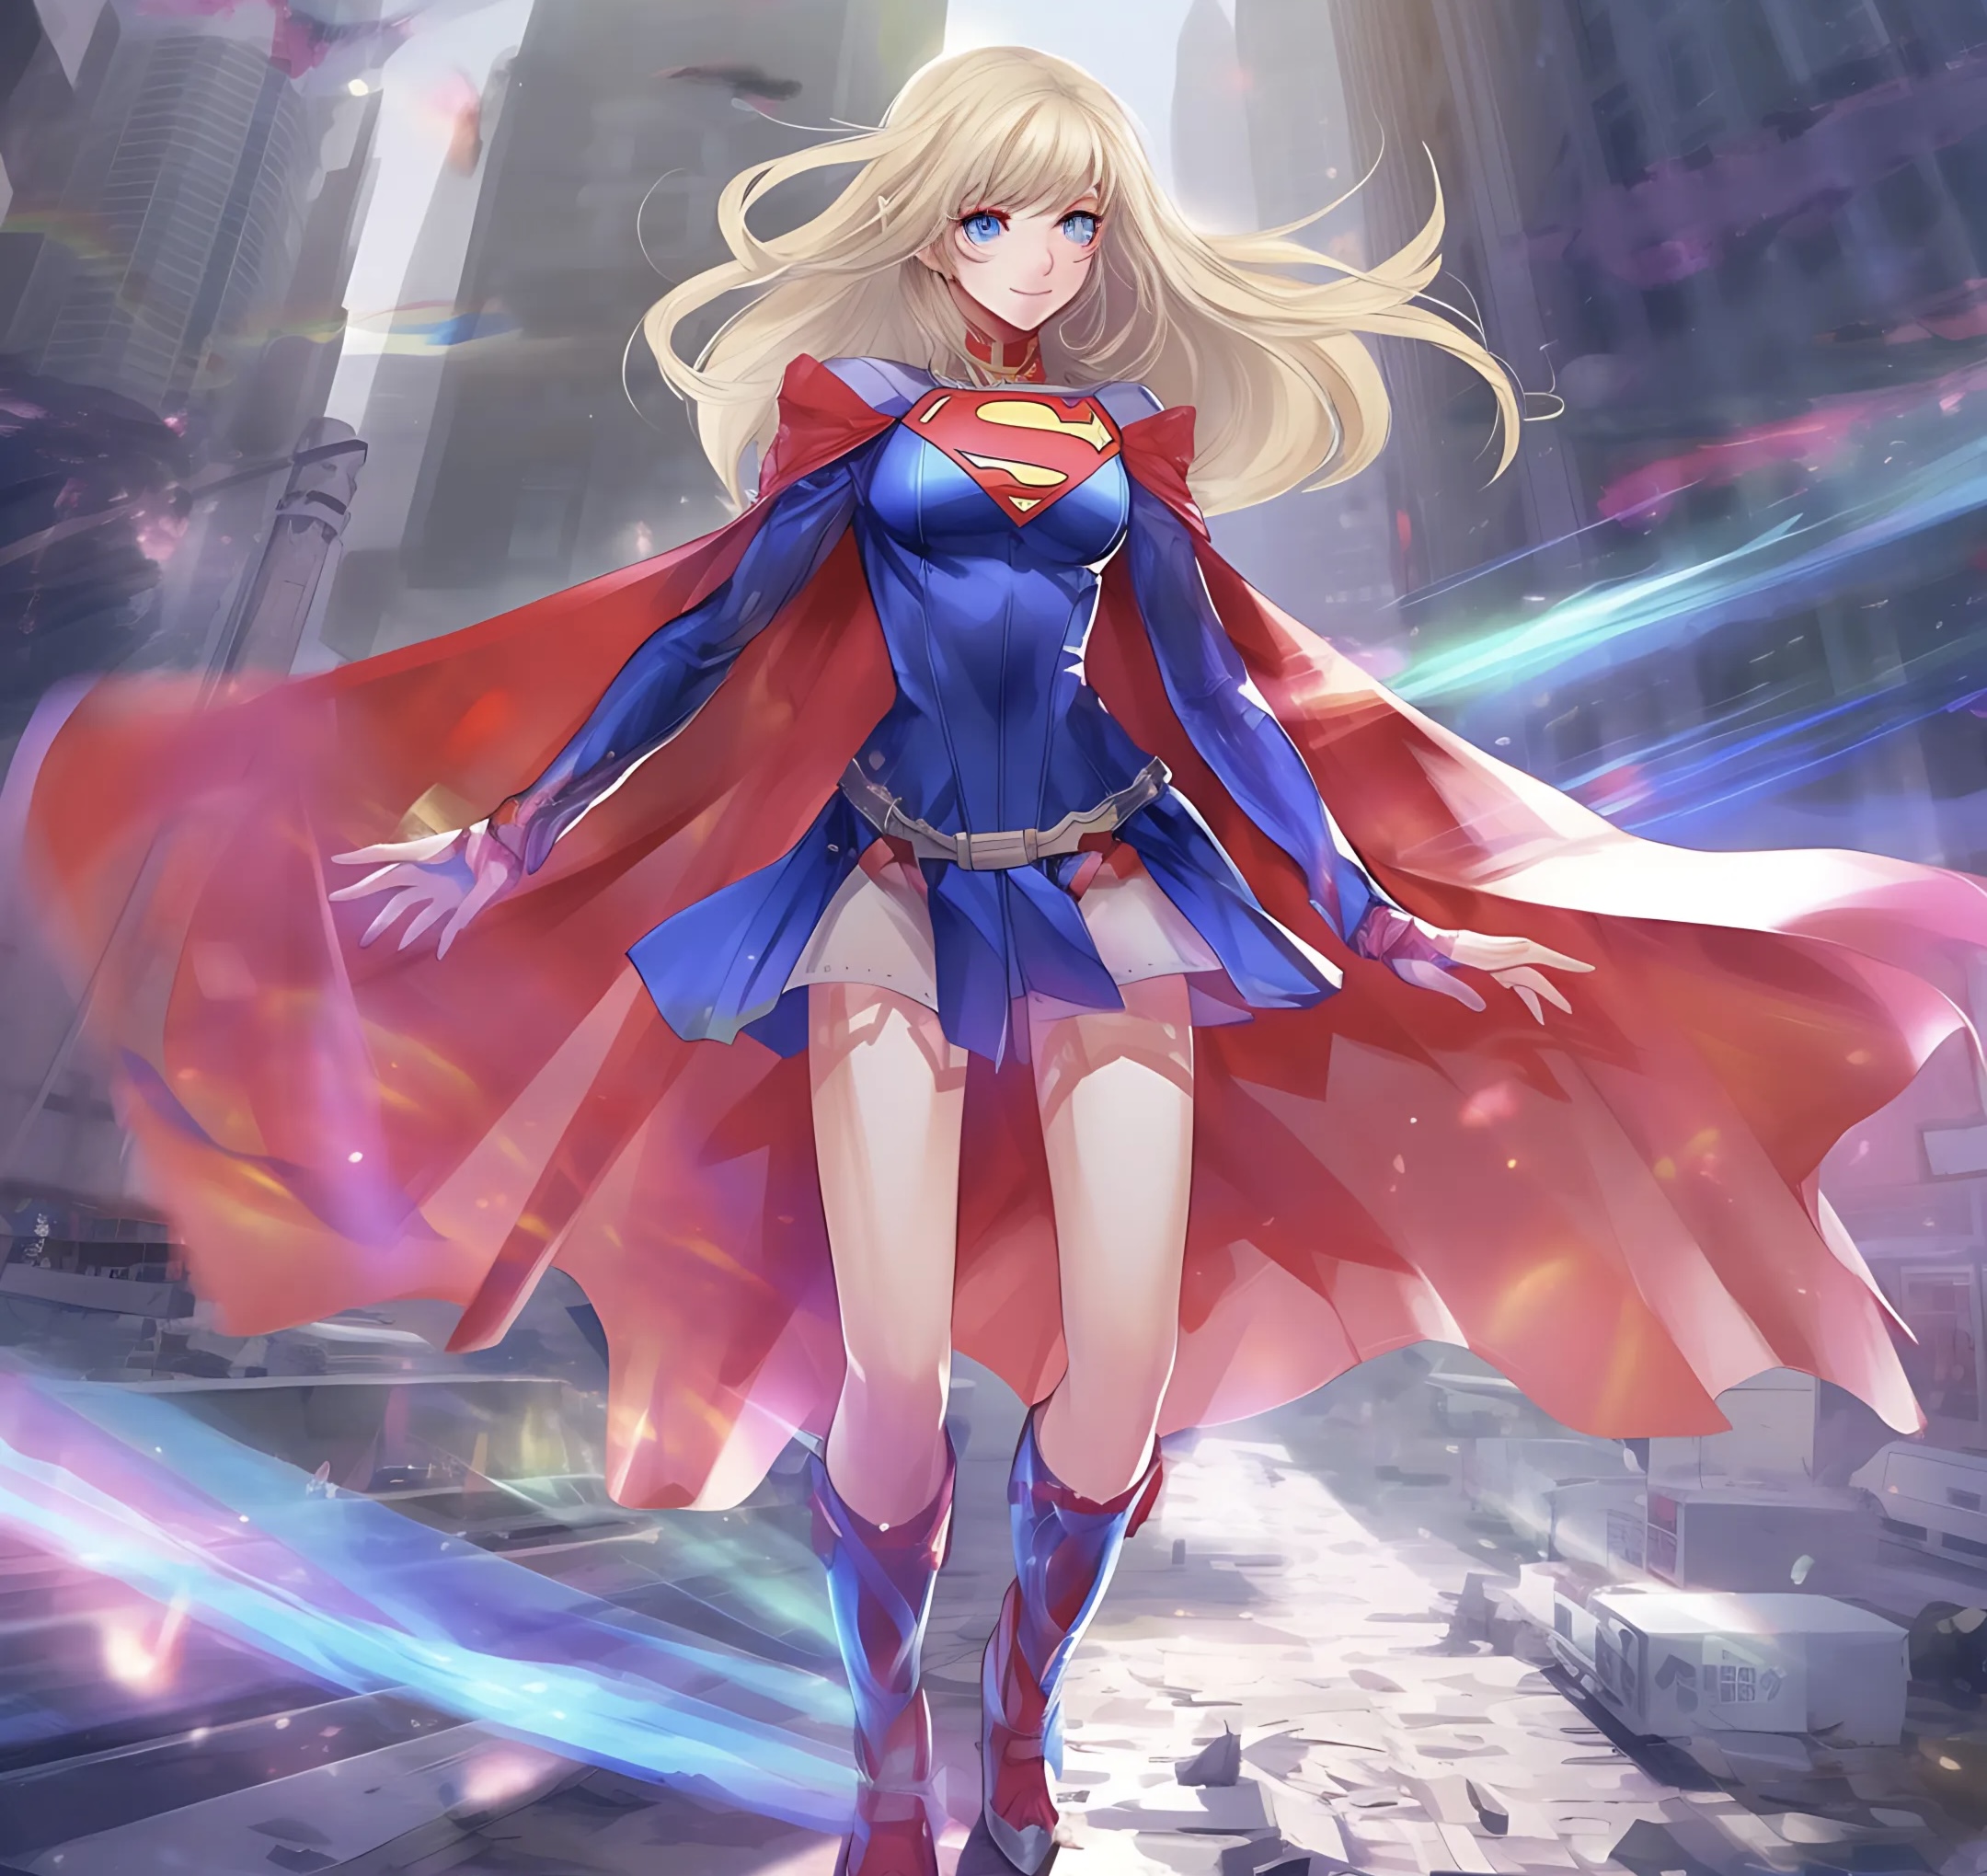 Supergirl Anime by kragf on DeviantArt